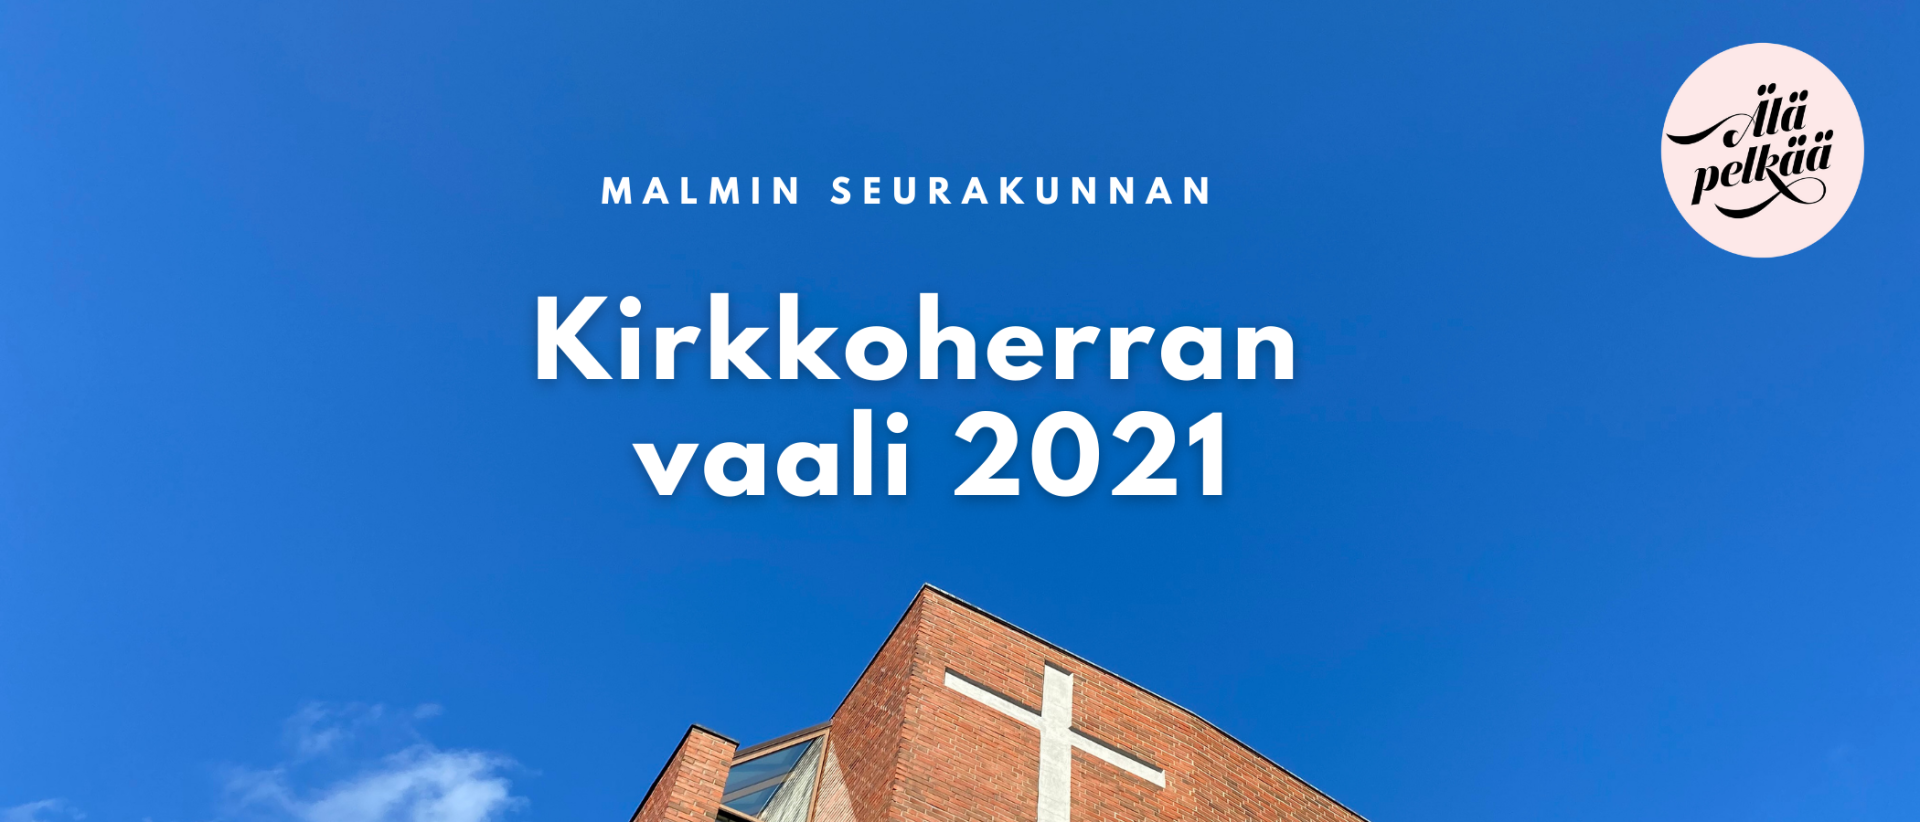 Malmin seurakunnan kirkkoherran vaali 2021